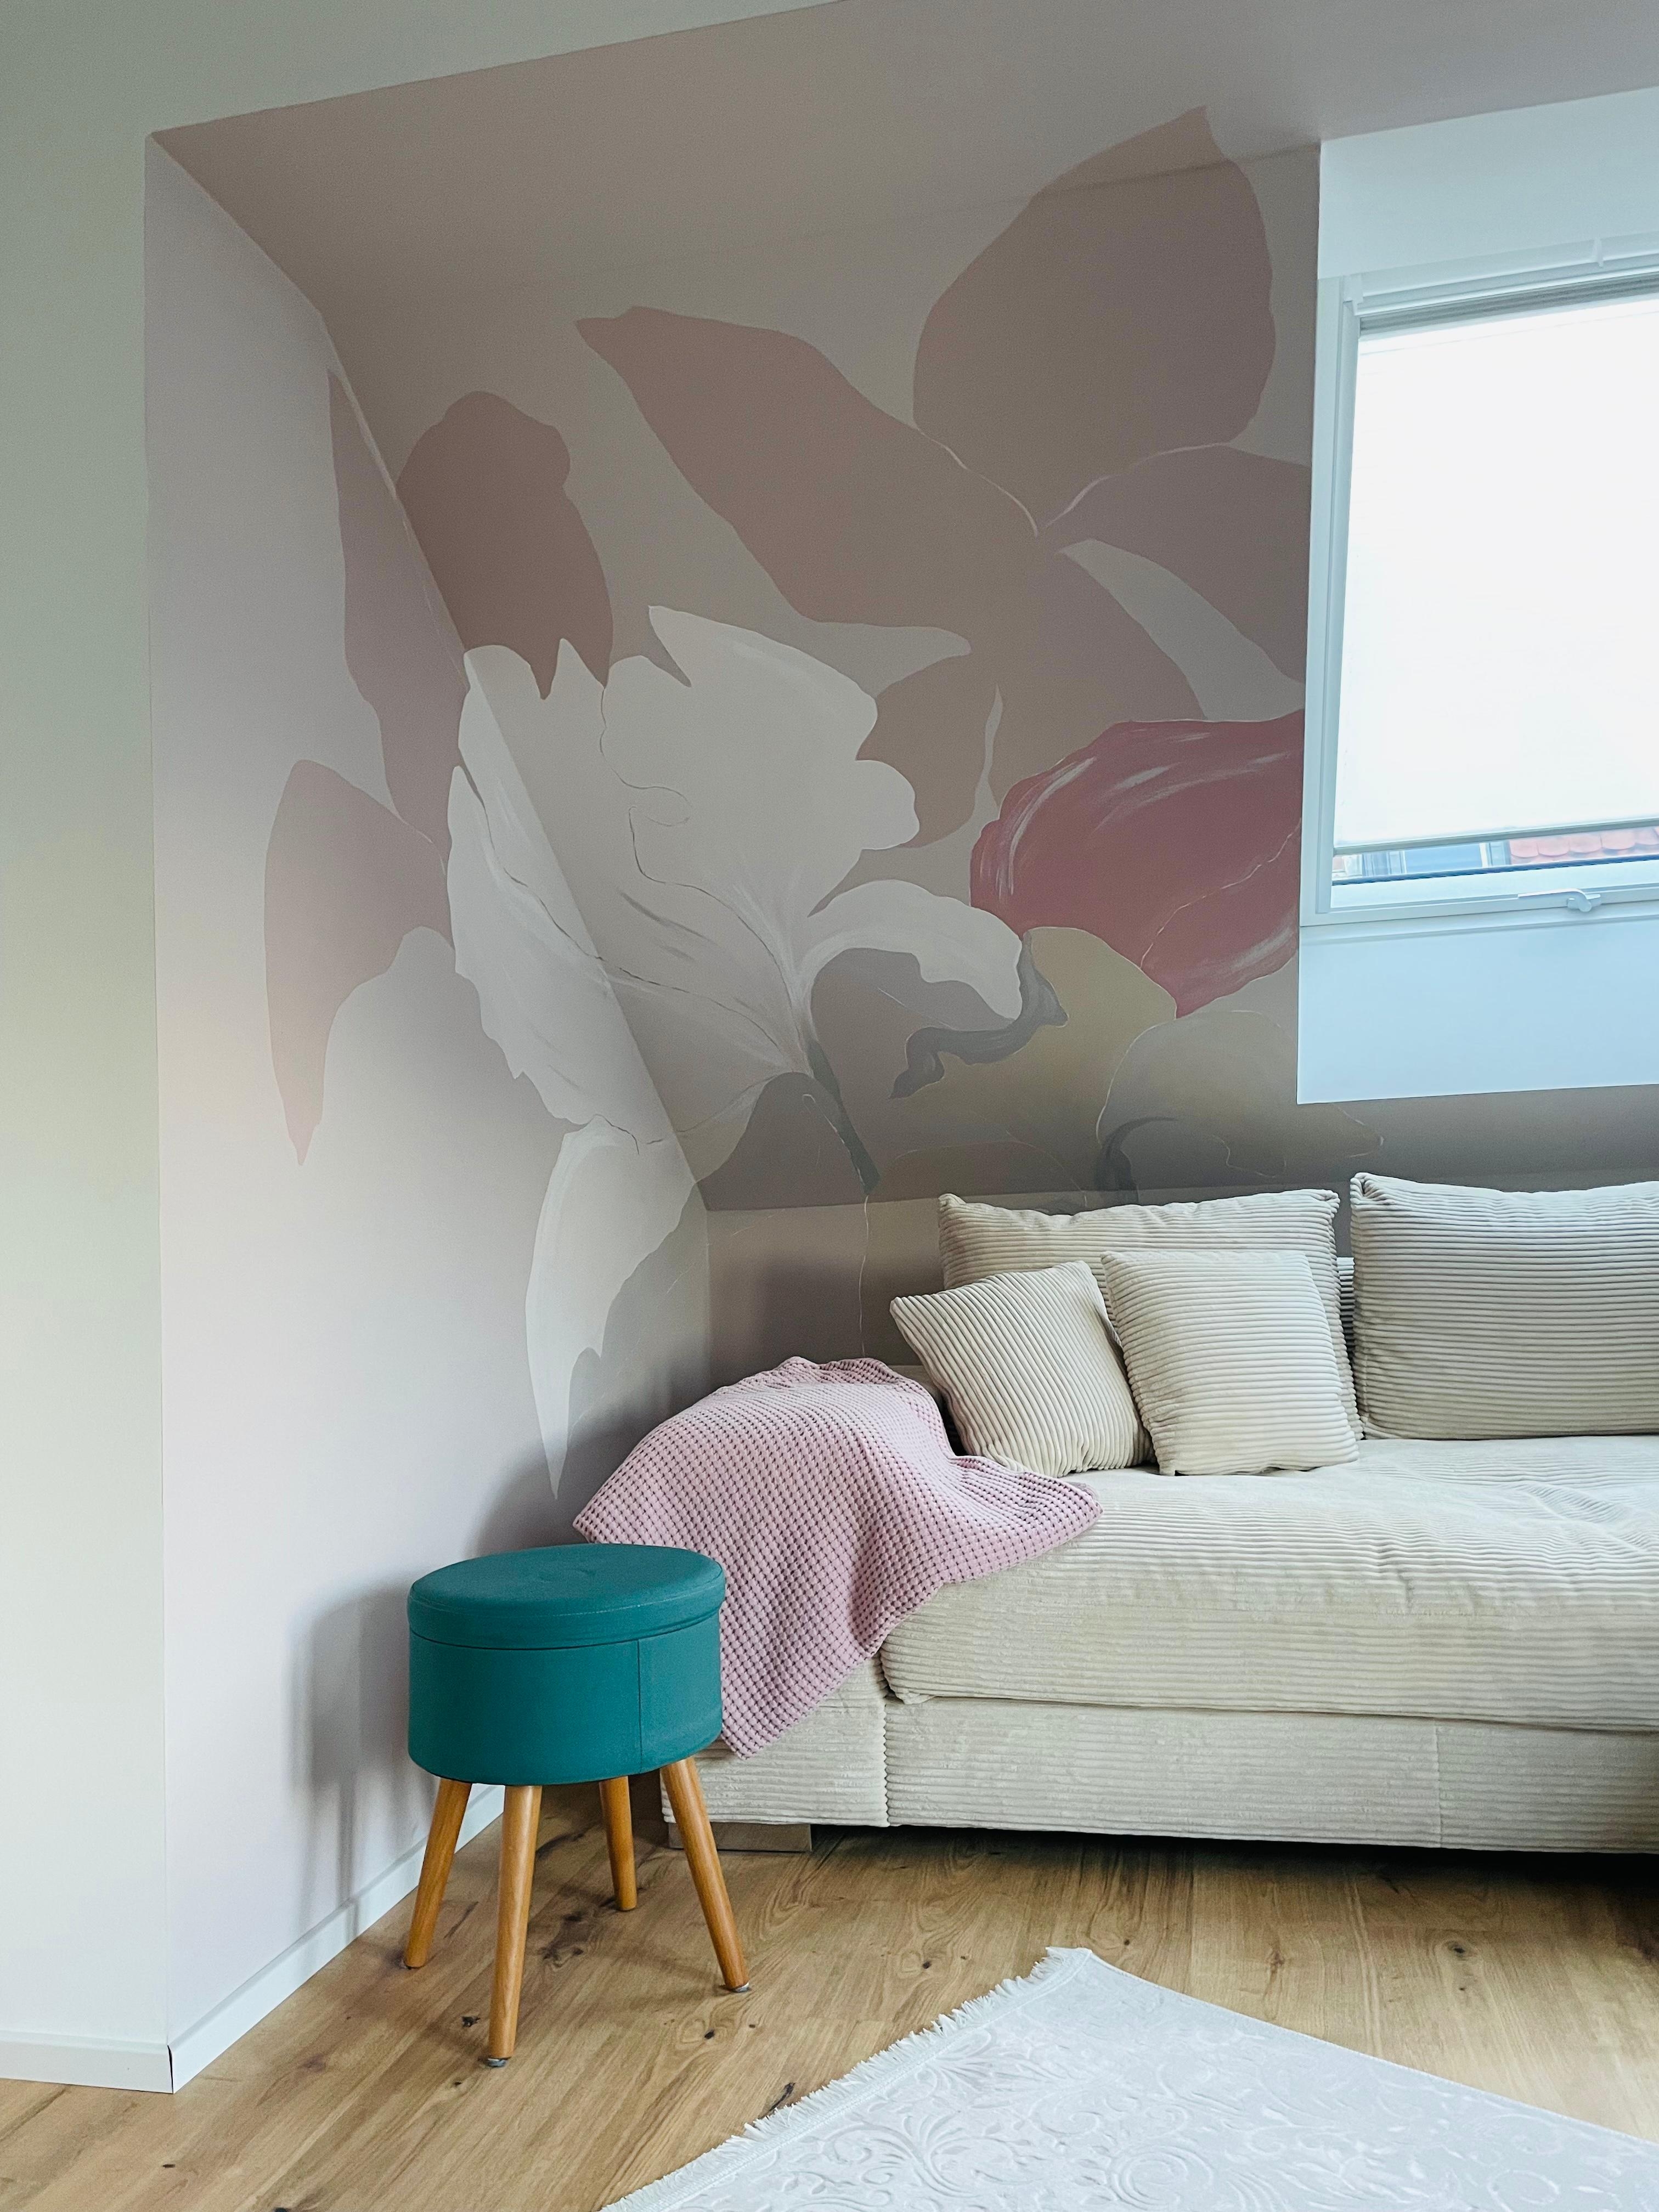 #wohnzimmer #wandgestaltung
#flowers #farbe #wandmalerei